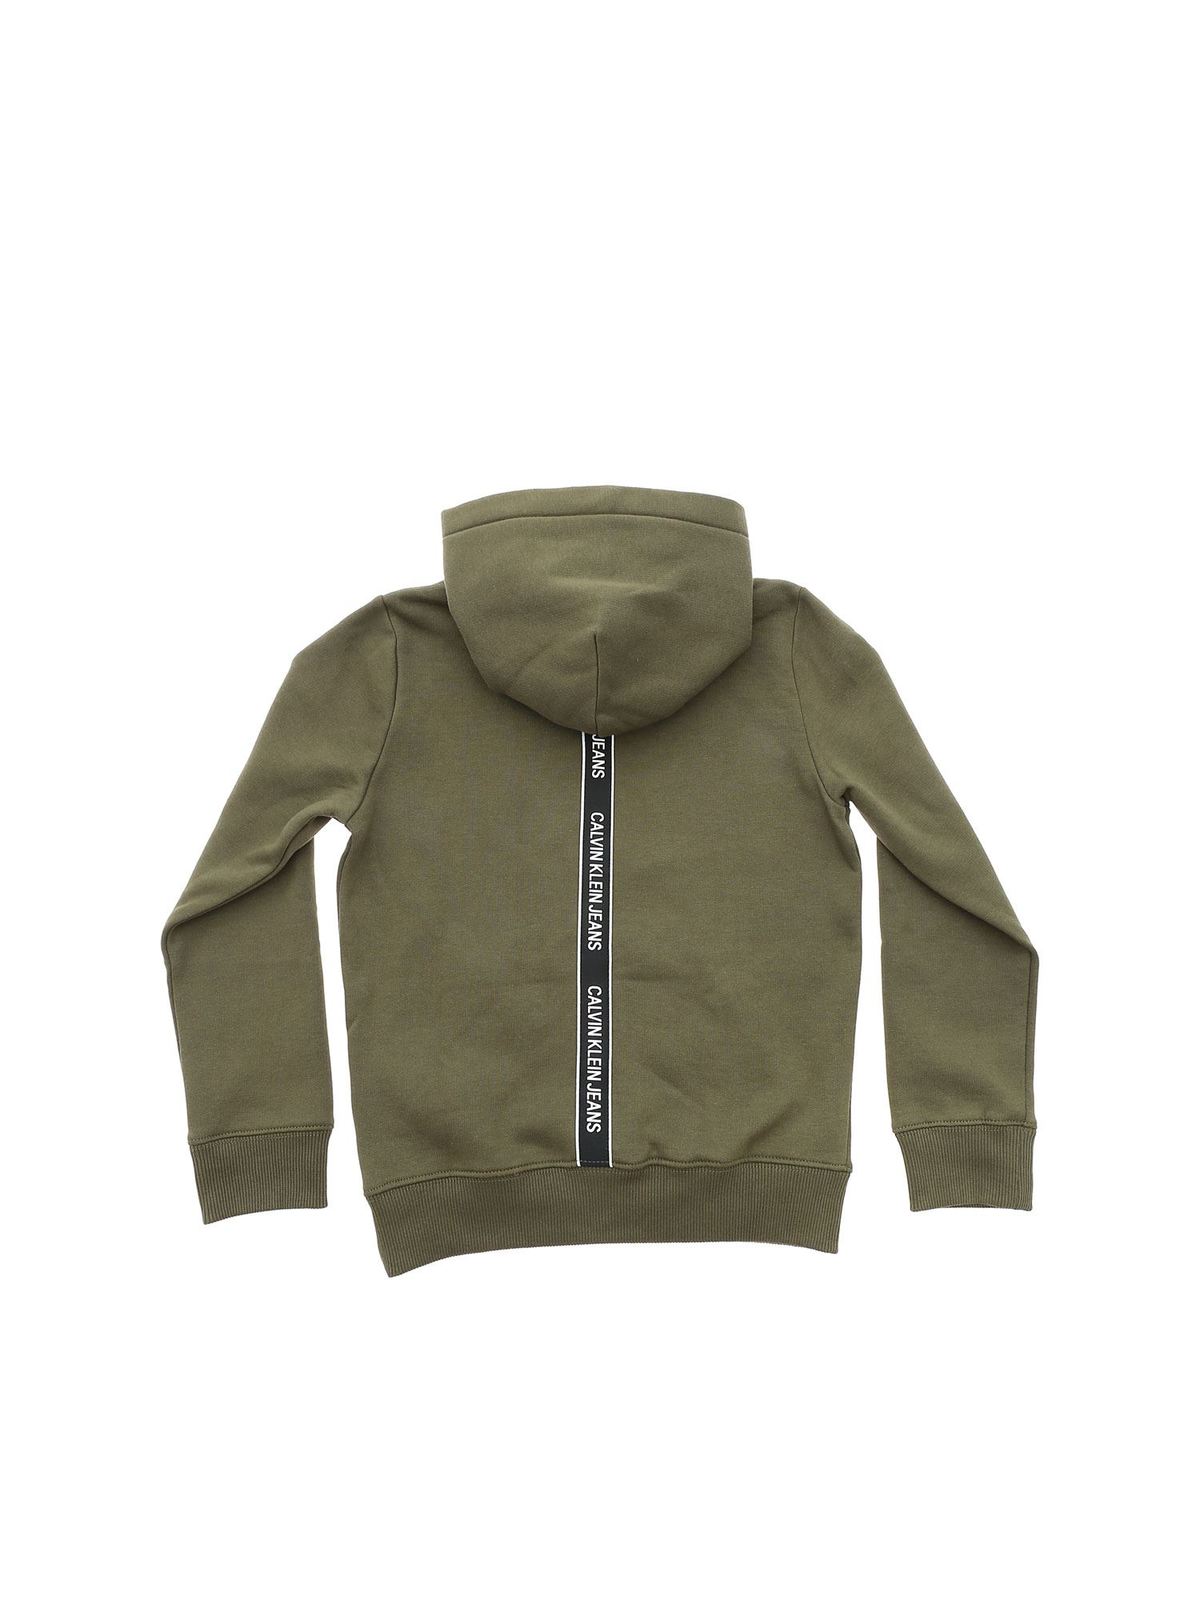 stijl rouw tweeling Sweatshirts & Sweaters Calvin Klein Jeans - Army green sweatshirt with logo  - 1B01B00265303